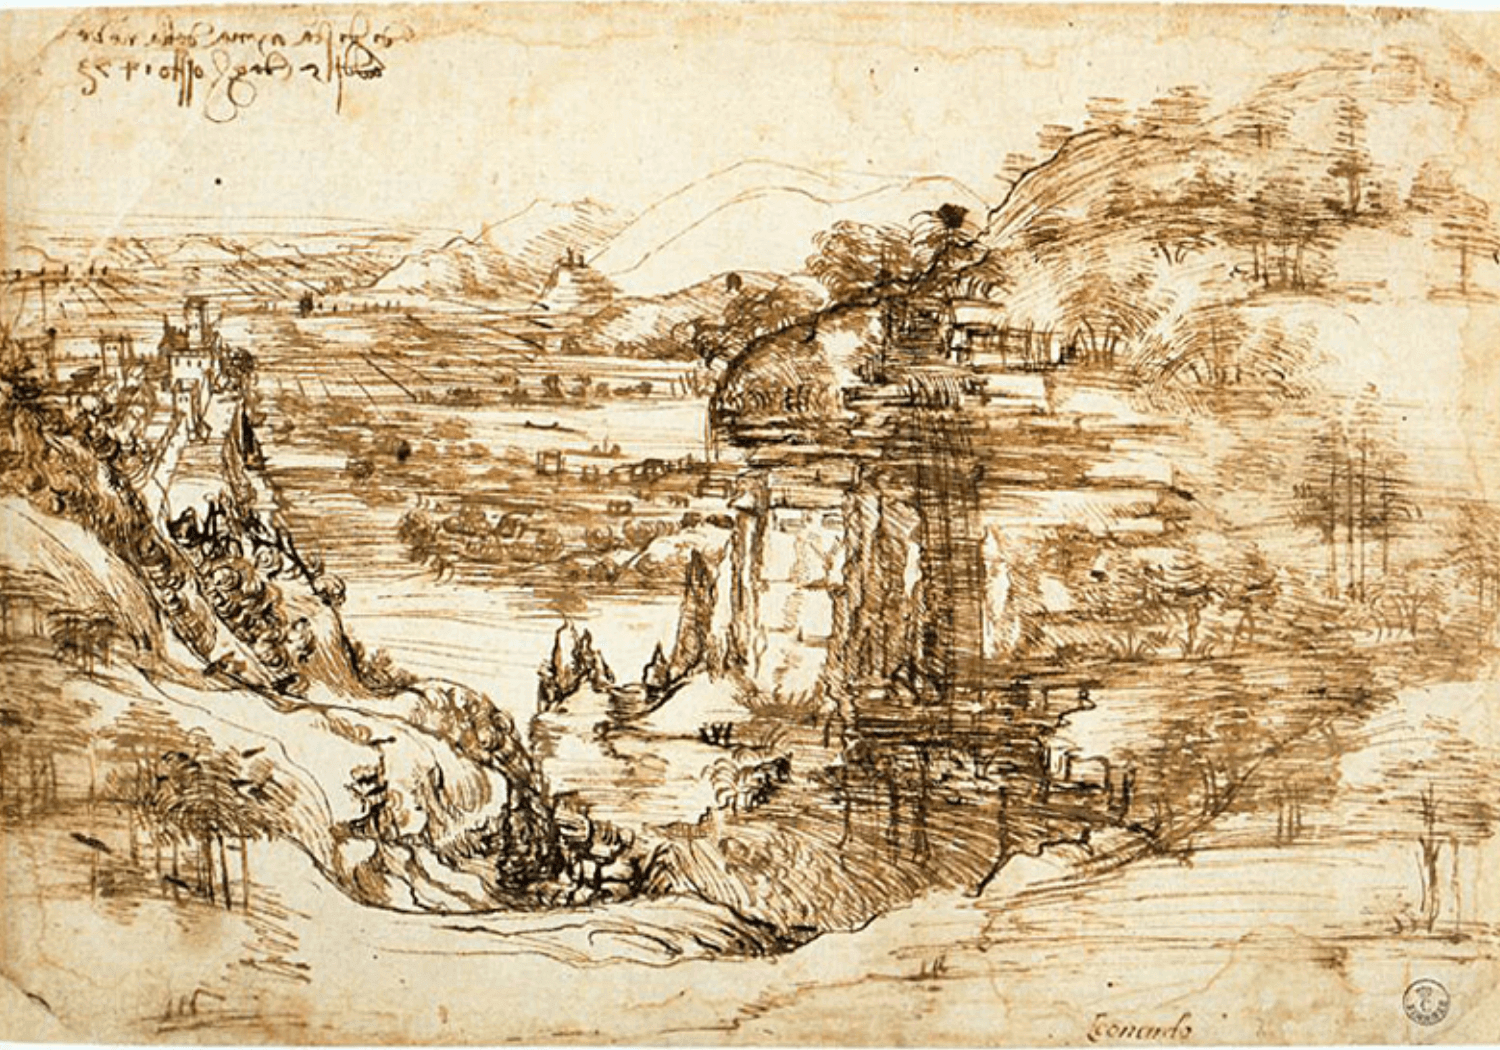 Da Vinci Landscape of Arno Valley